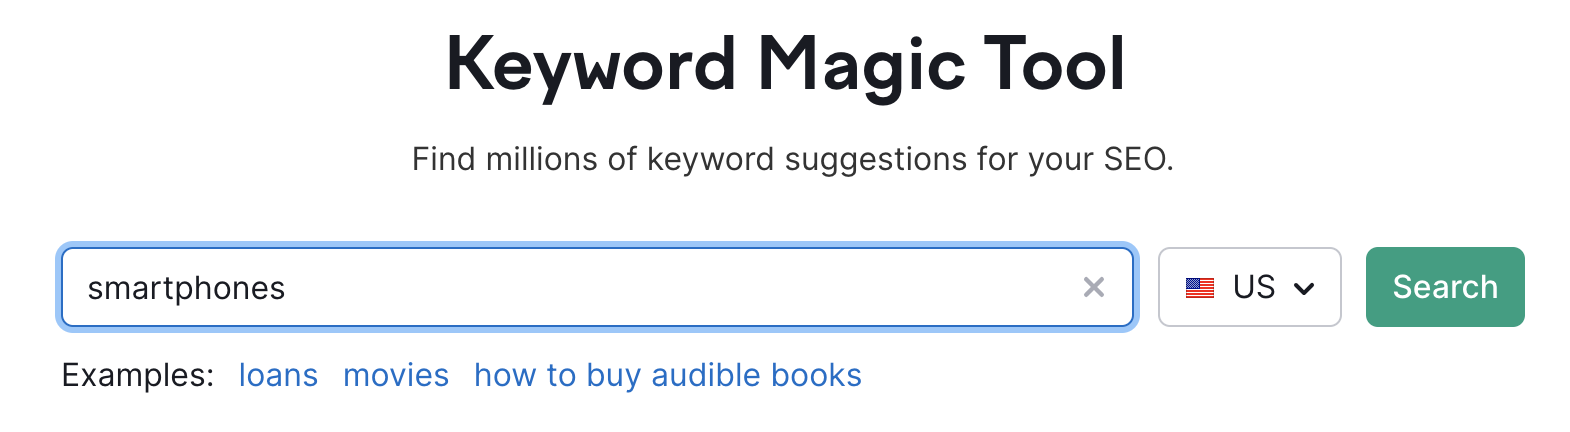 “smartphones” entered in Keyword Magic Tool search bar